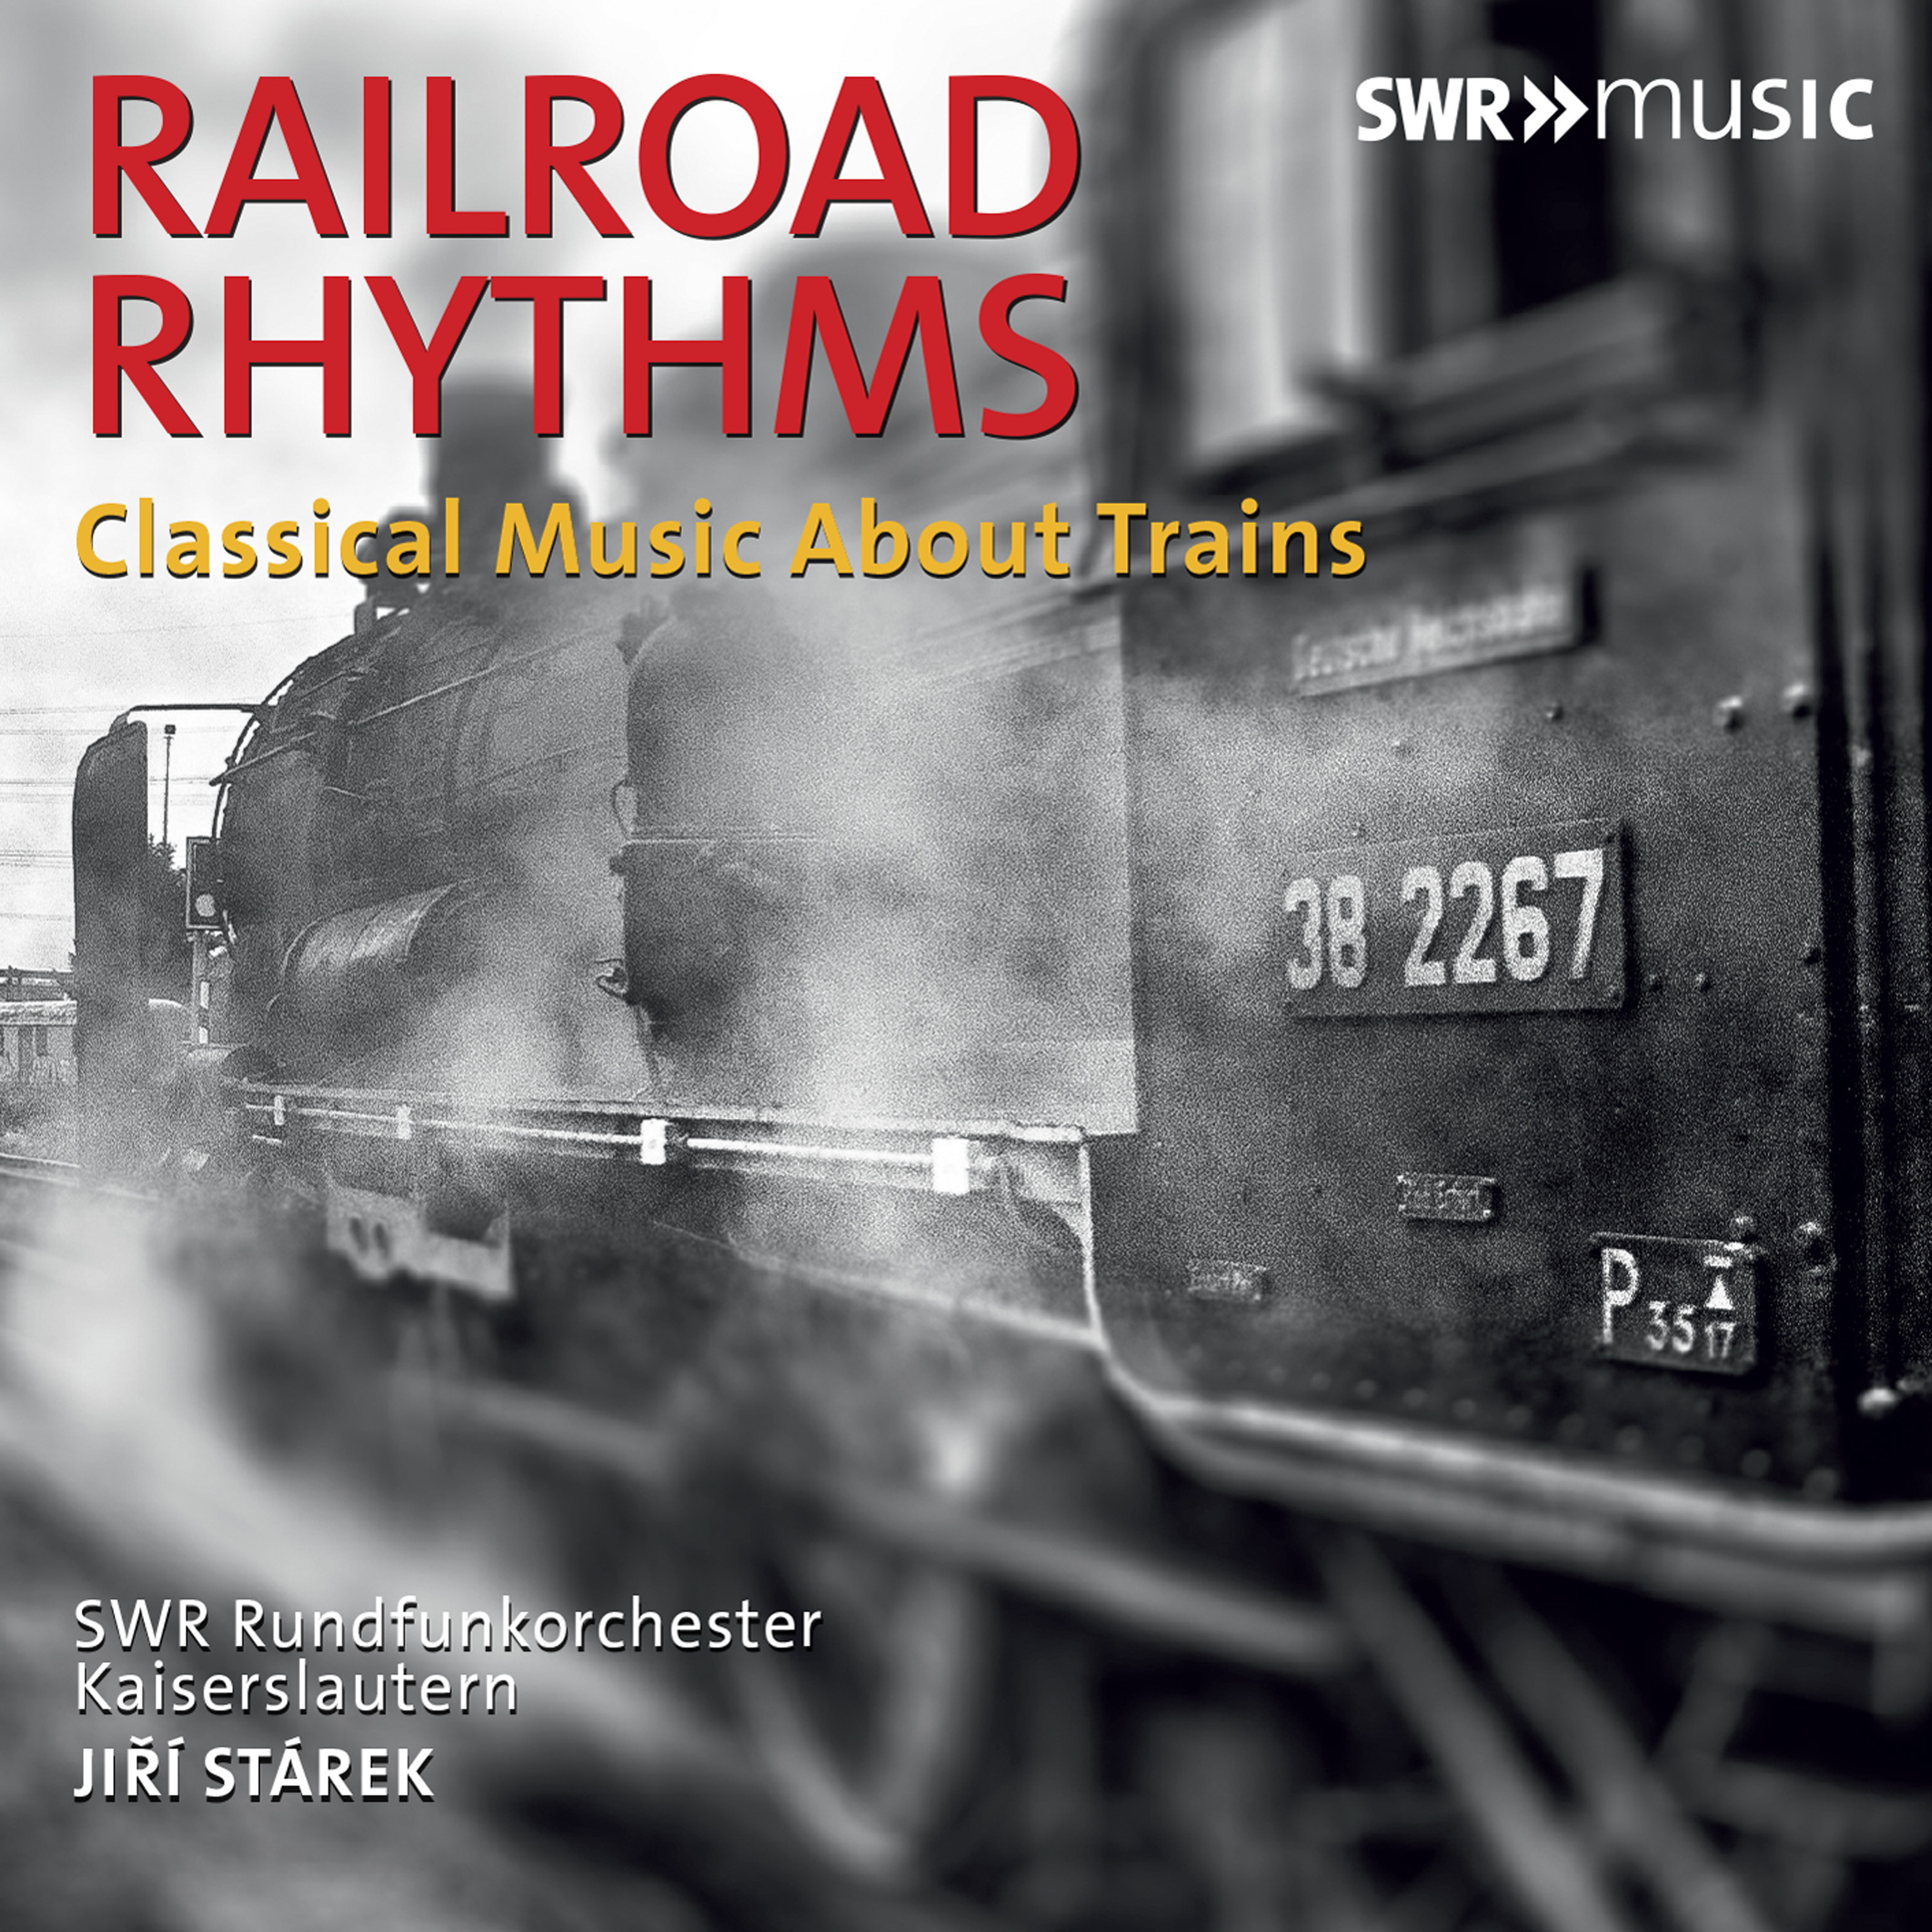 Musica para Charlar: Construction of the Railroad